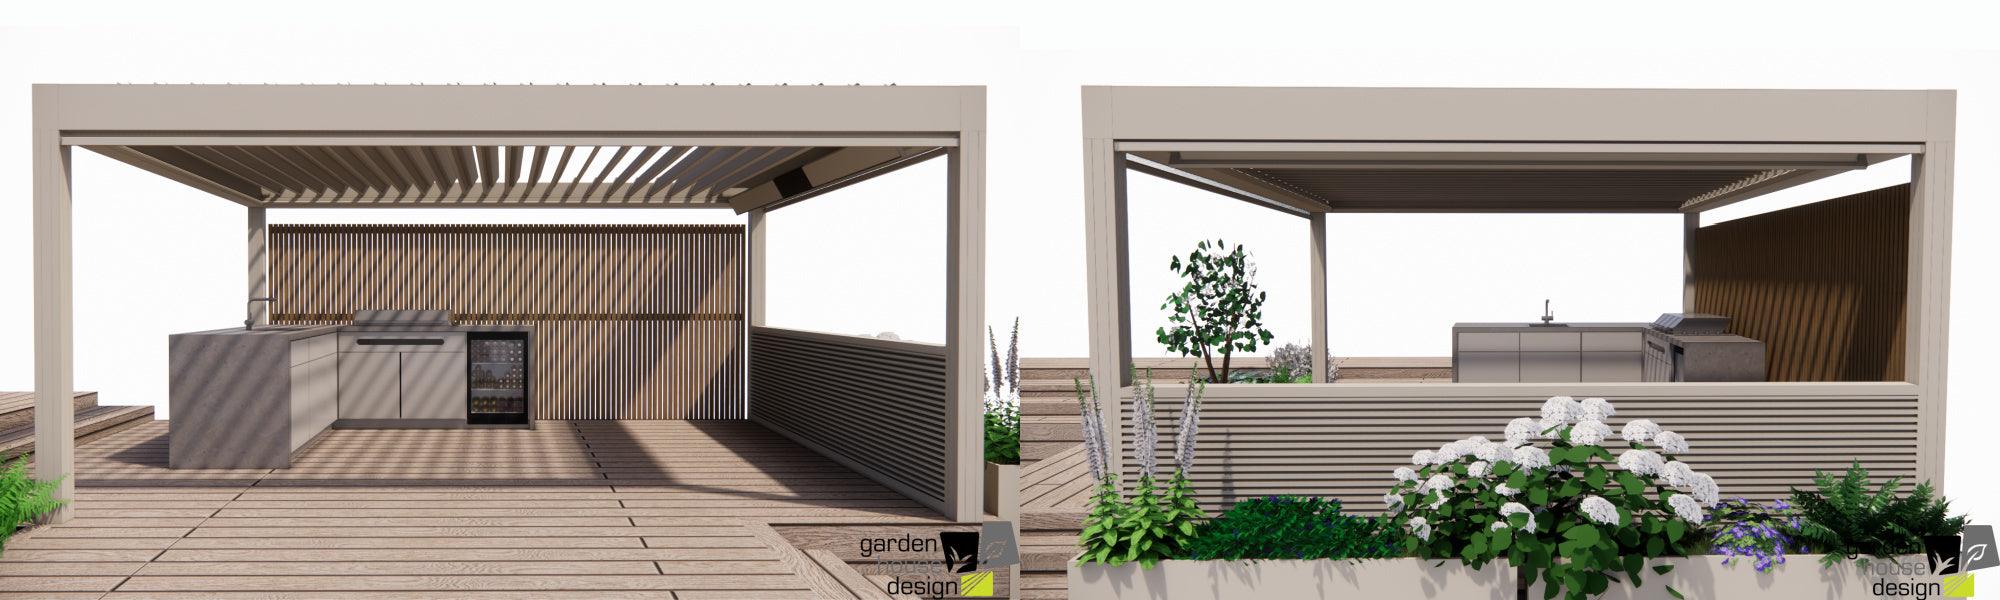 Garden_House_Design_Visuals_renders_with_canopy_and_outdoor_kitchen_fc814c6b-3f2c-4b17-b50d-a7c43b10ea9a - Garden House Design